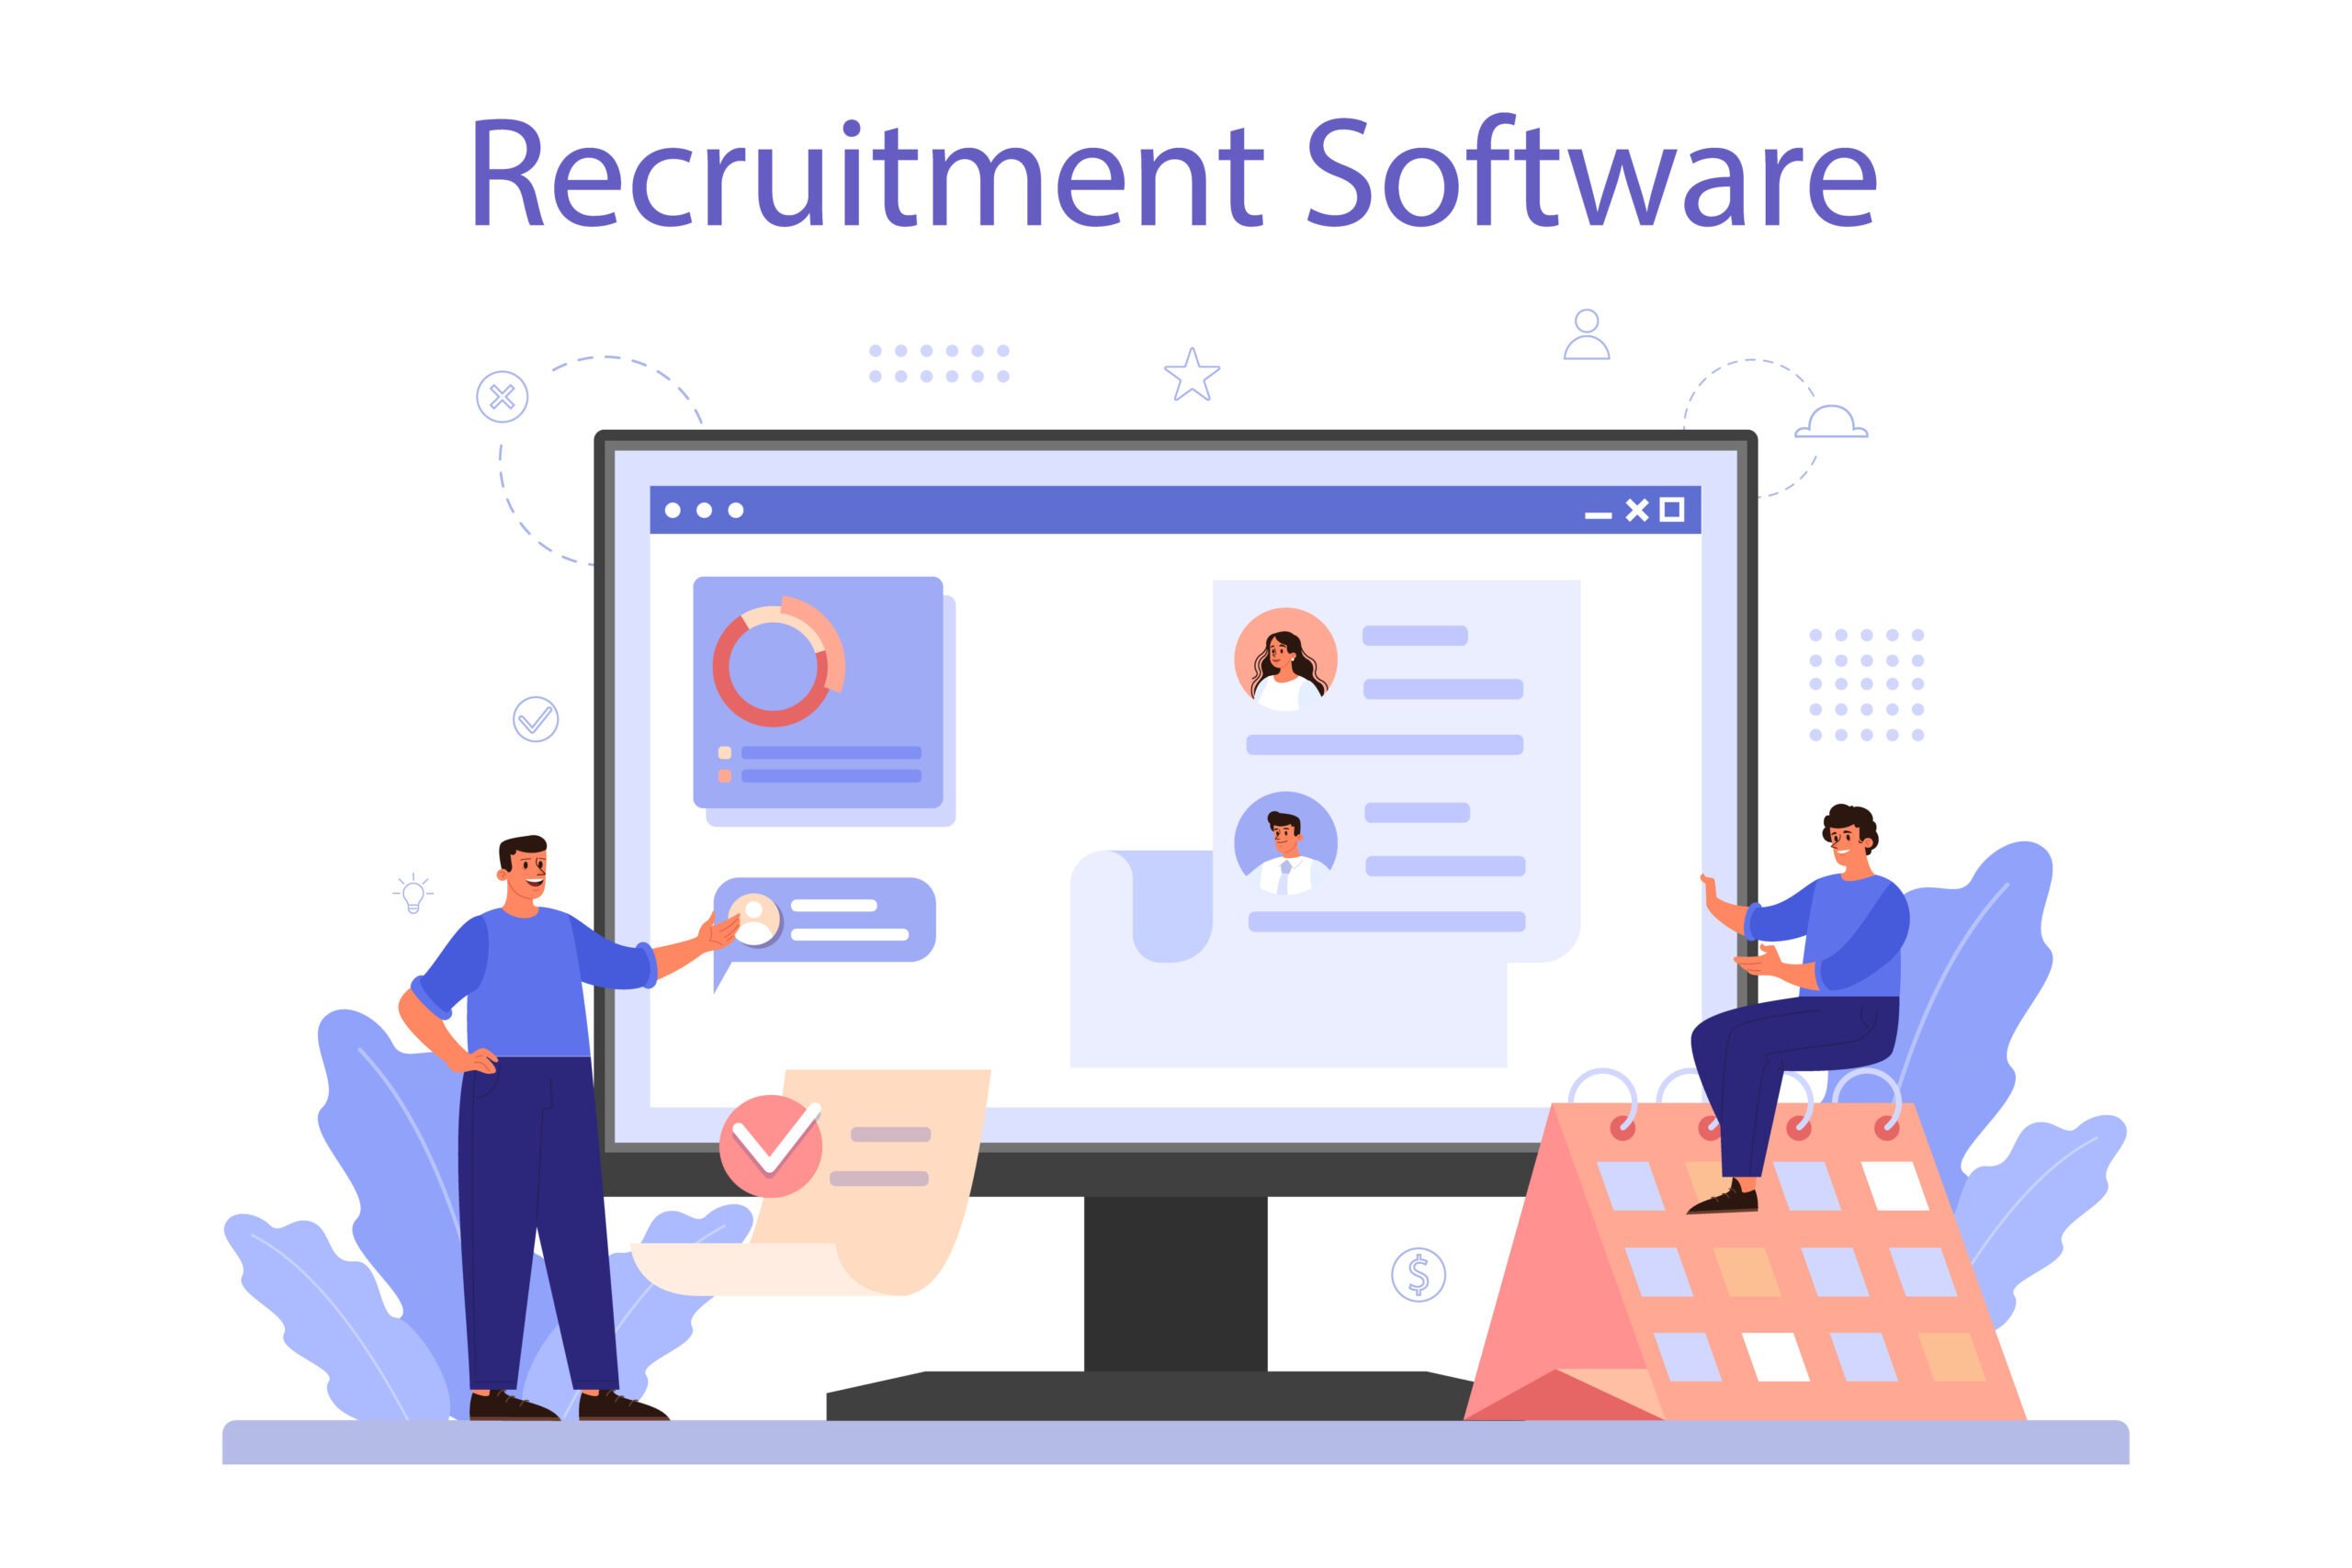 Recruiting Software